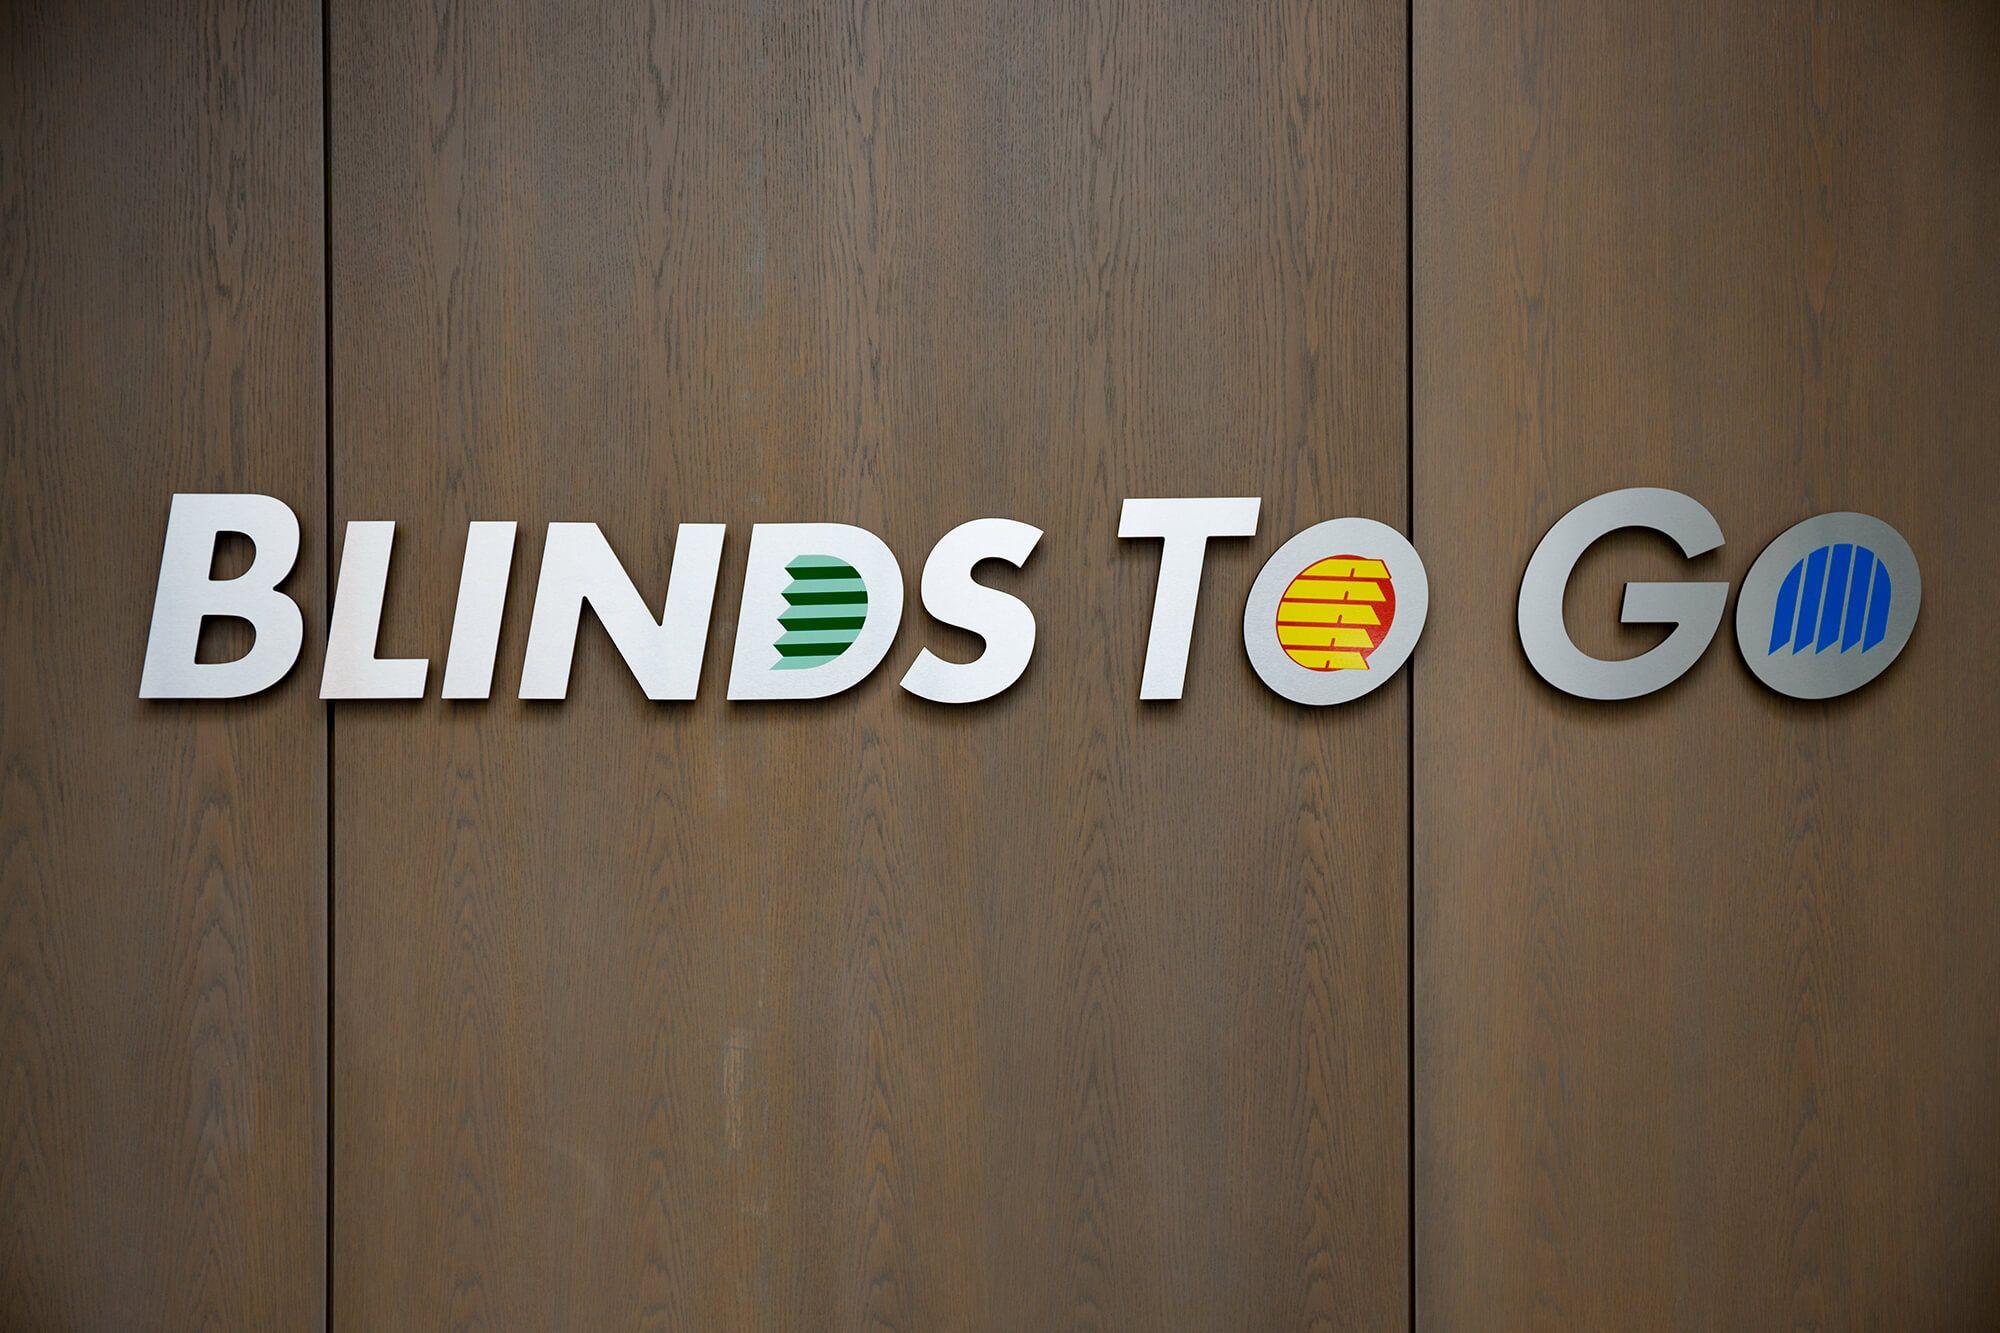 Blinds To Go logo on wood background.